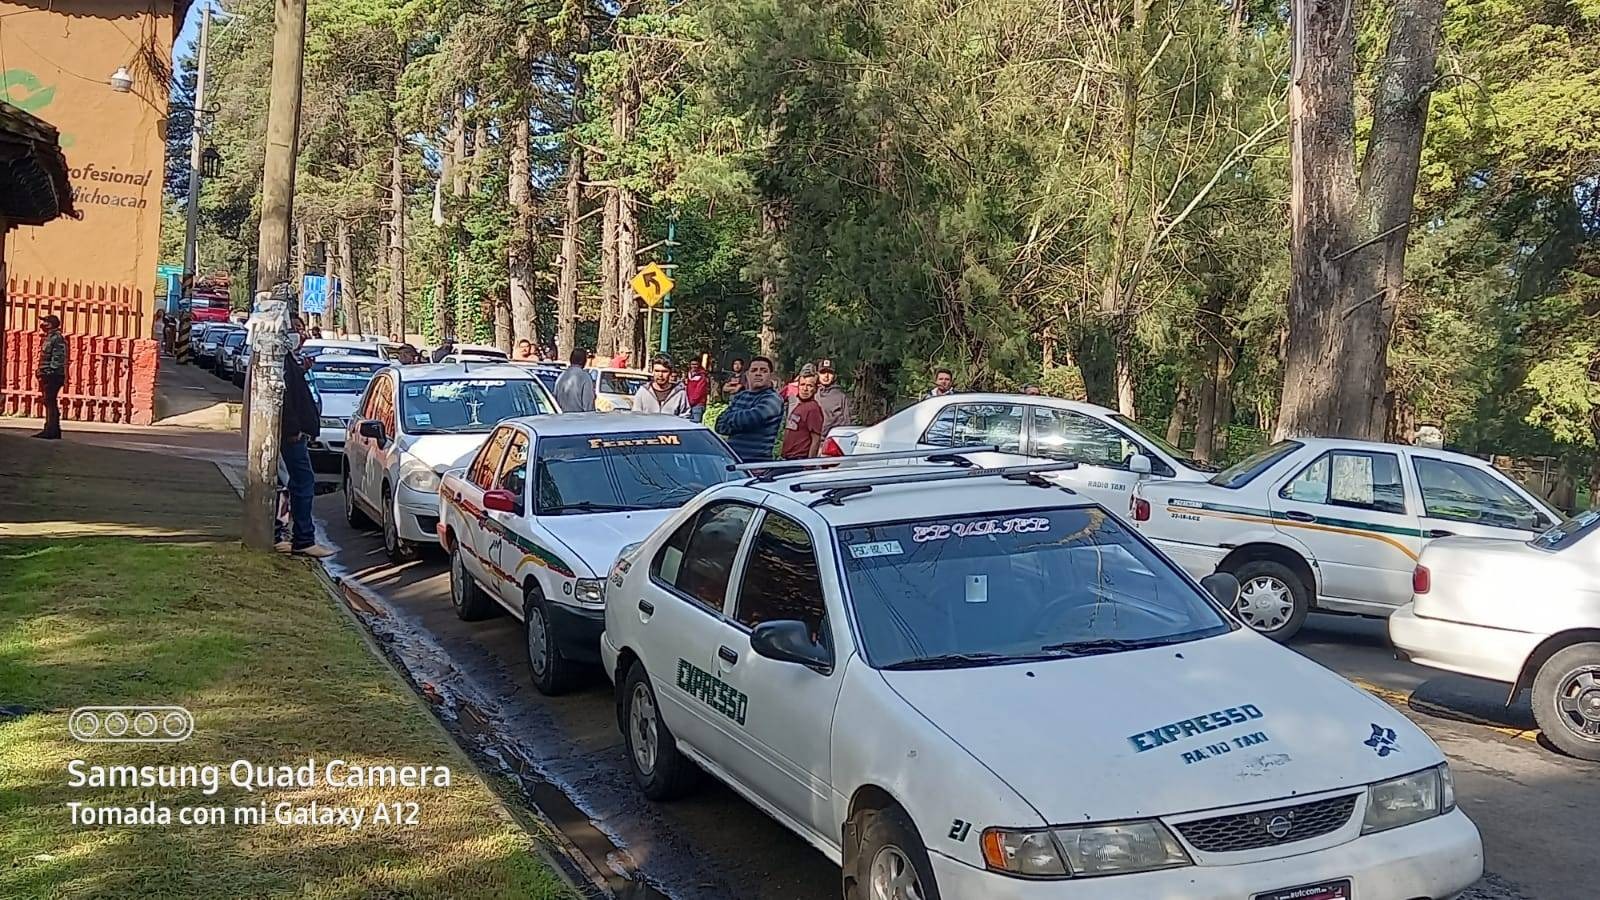 Taxistas Pátzcuaro cierre de calles pirataje